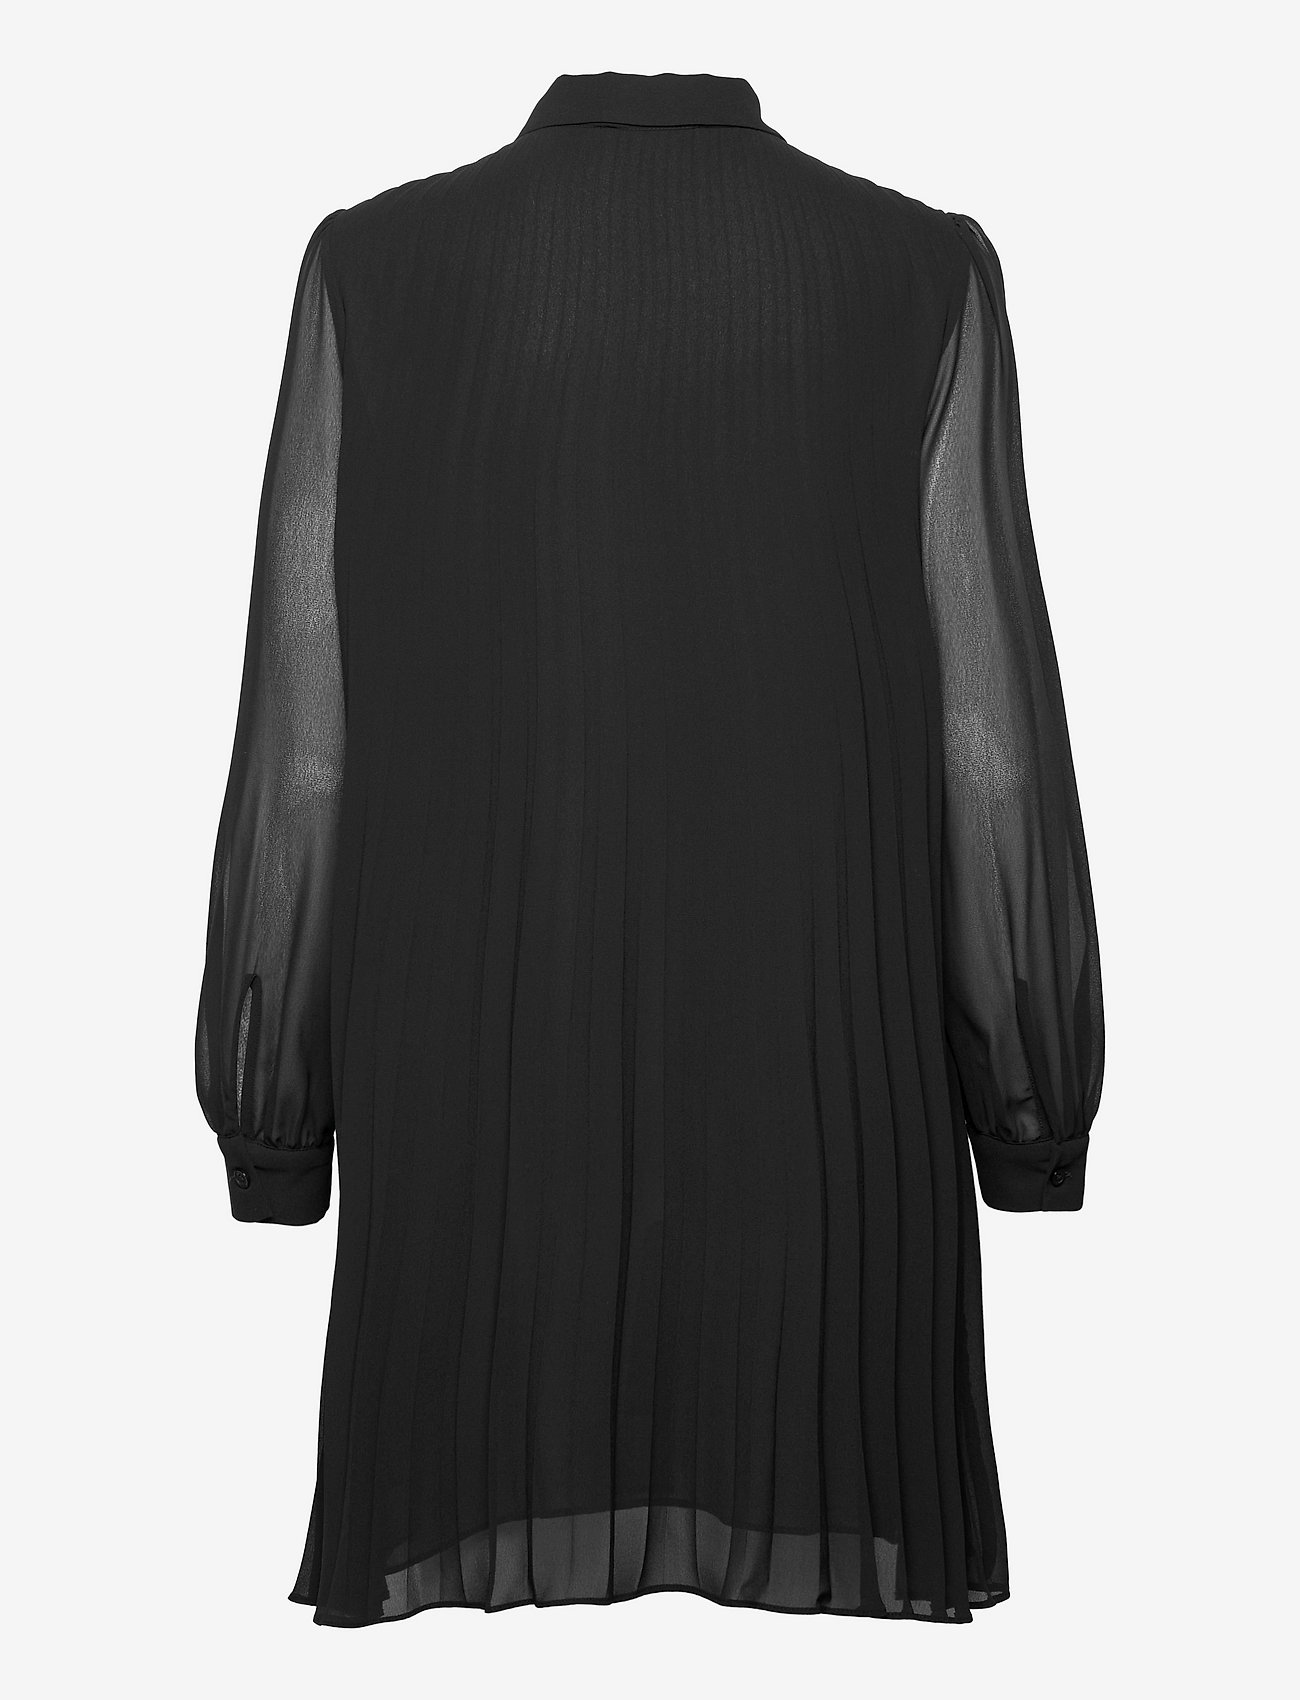 Michael Kors - PLEATED MINI SHIRT DRESS - black - 1